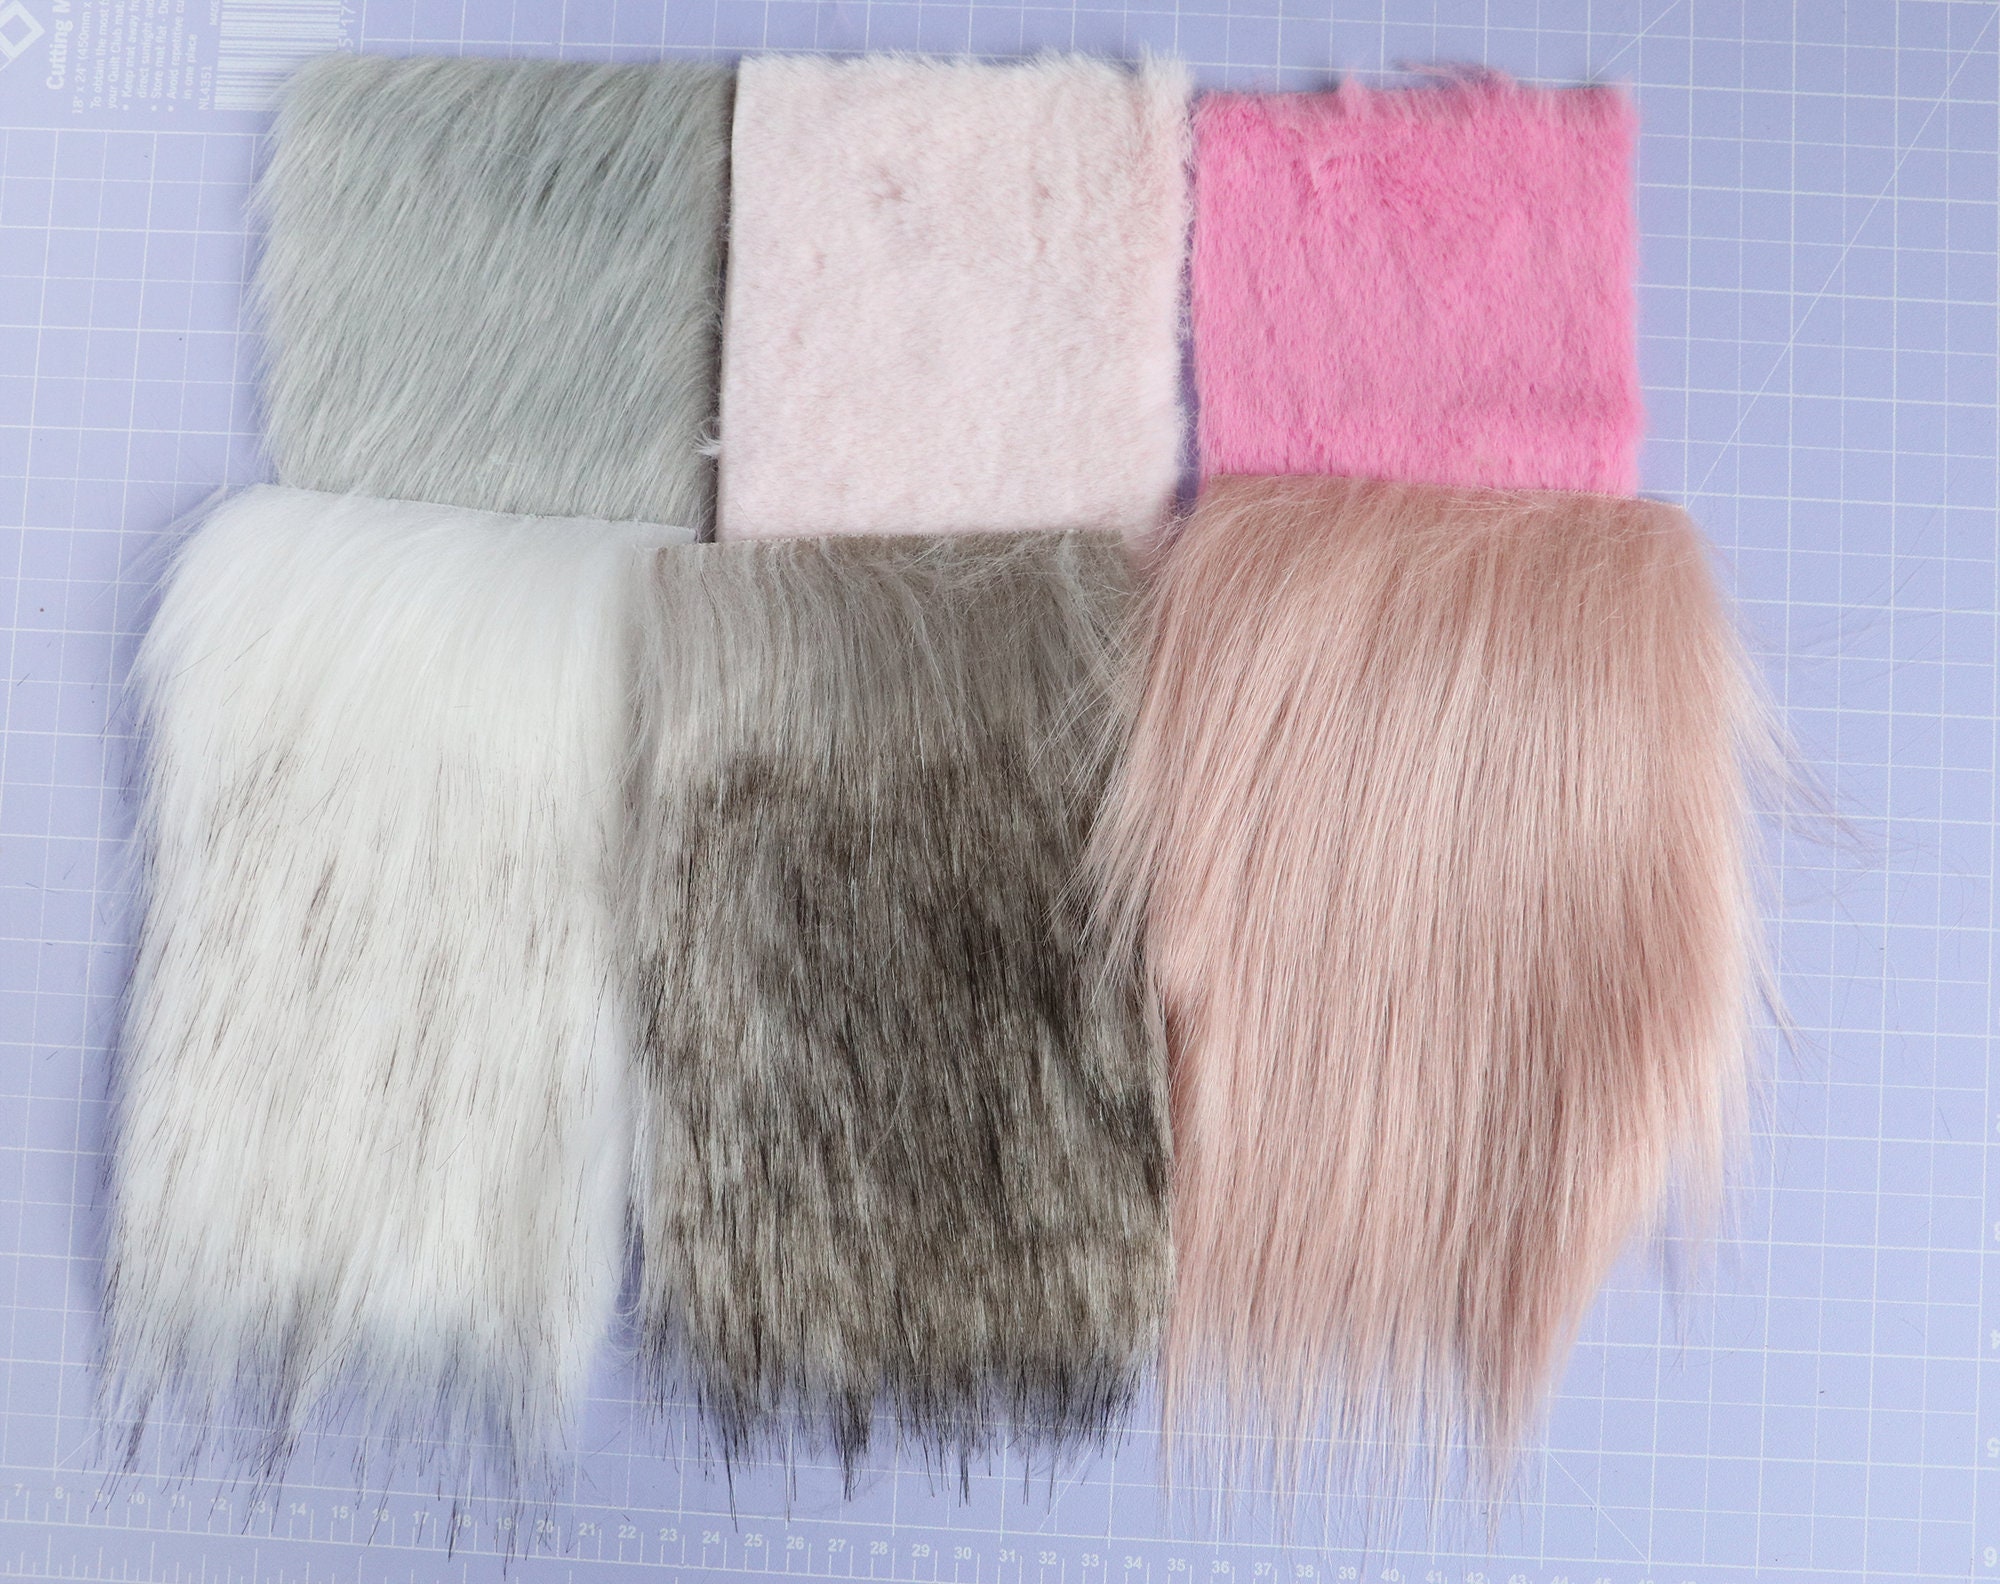 miniature bear fabric long pile mini bear fabric mini faux fur for